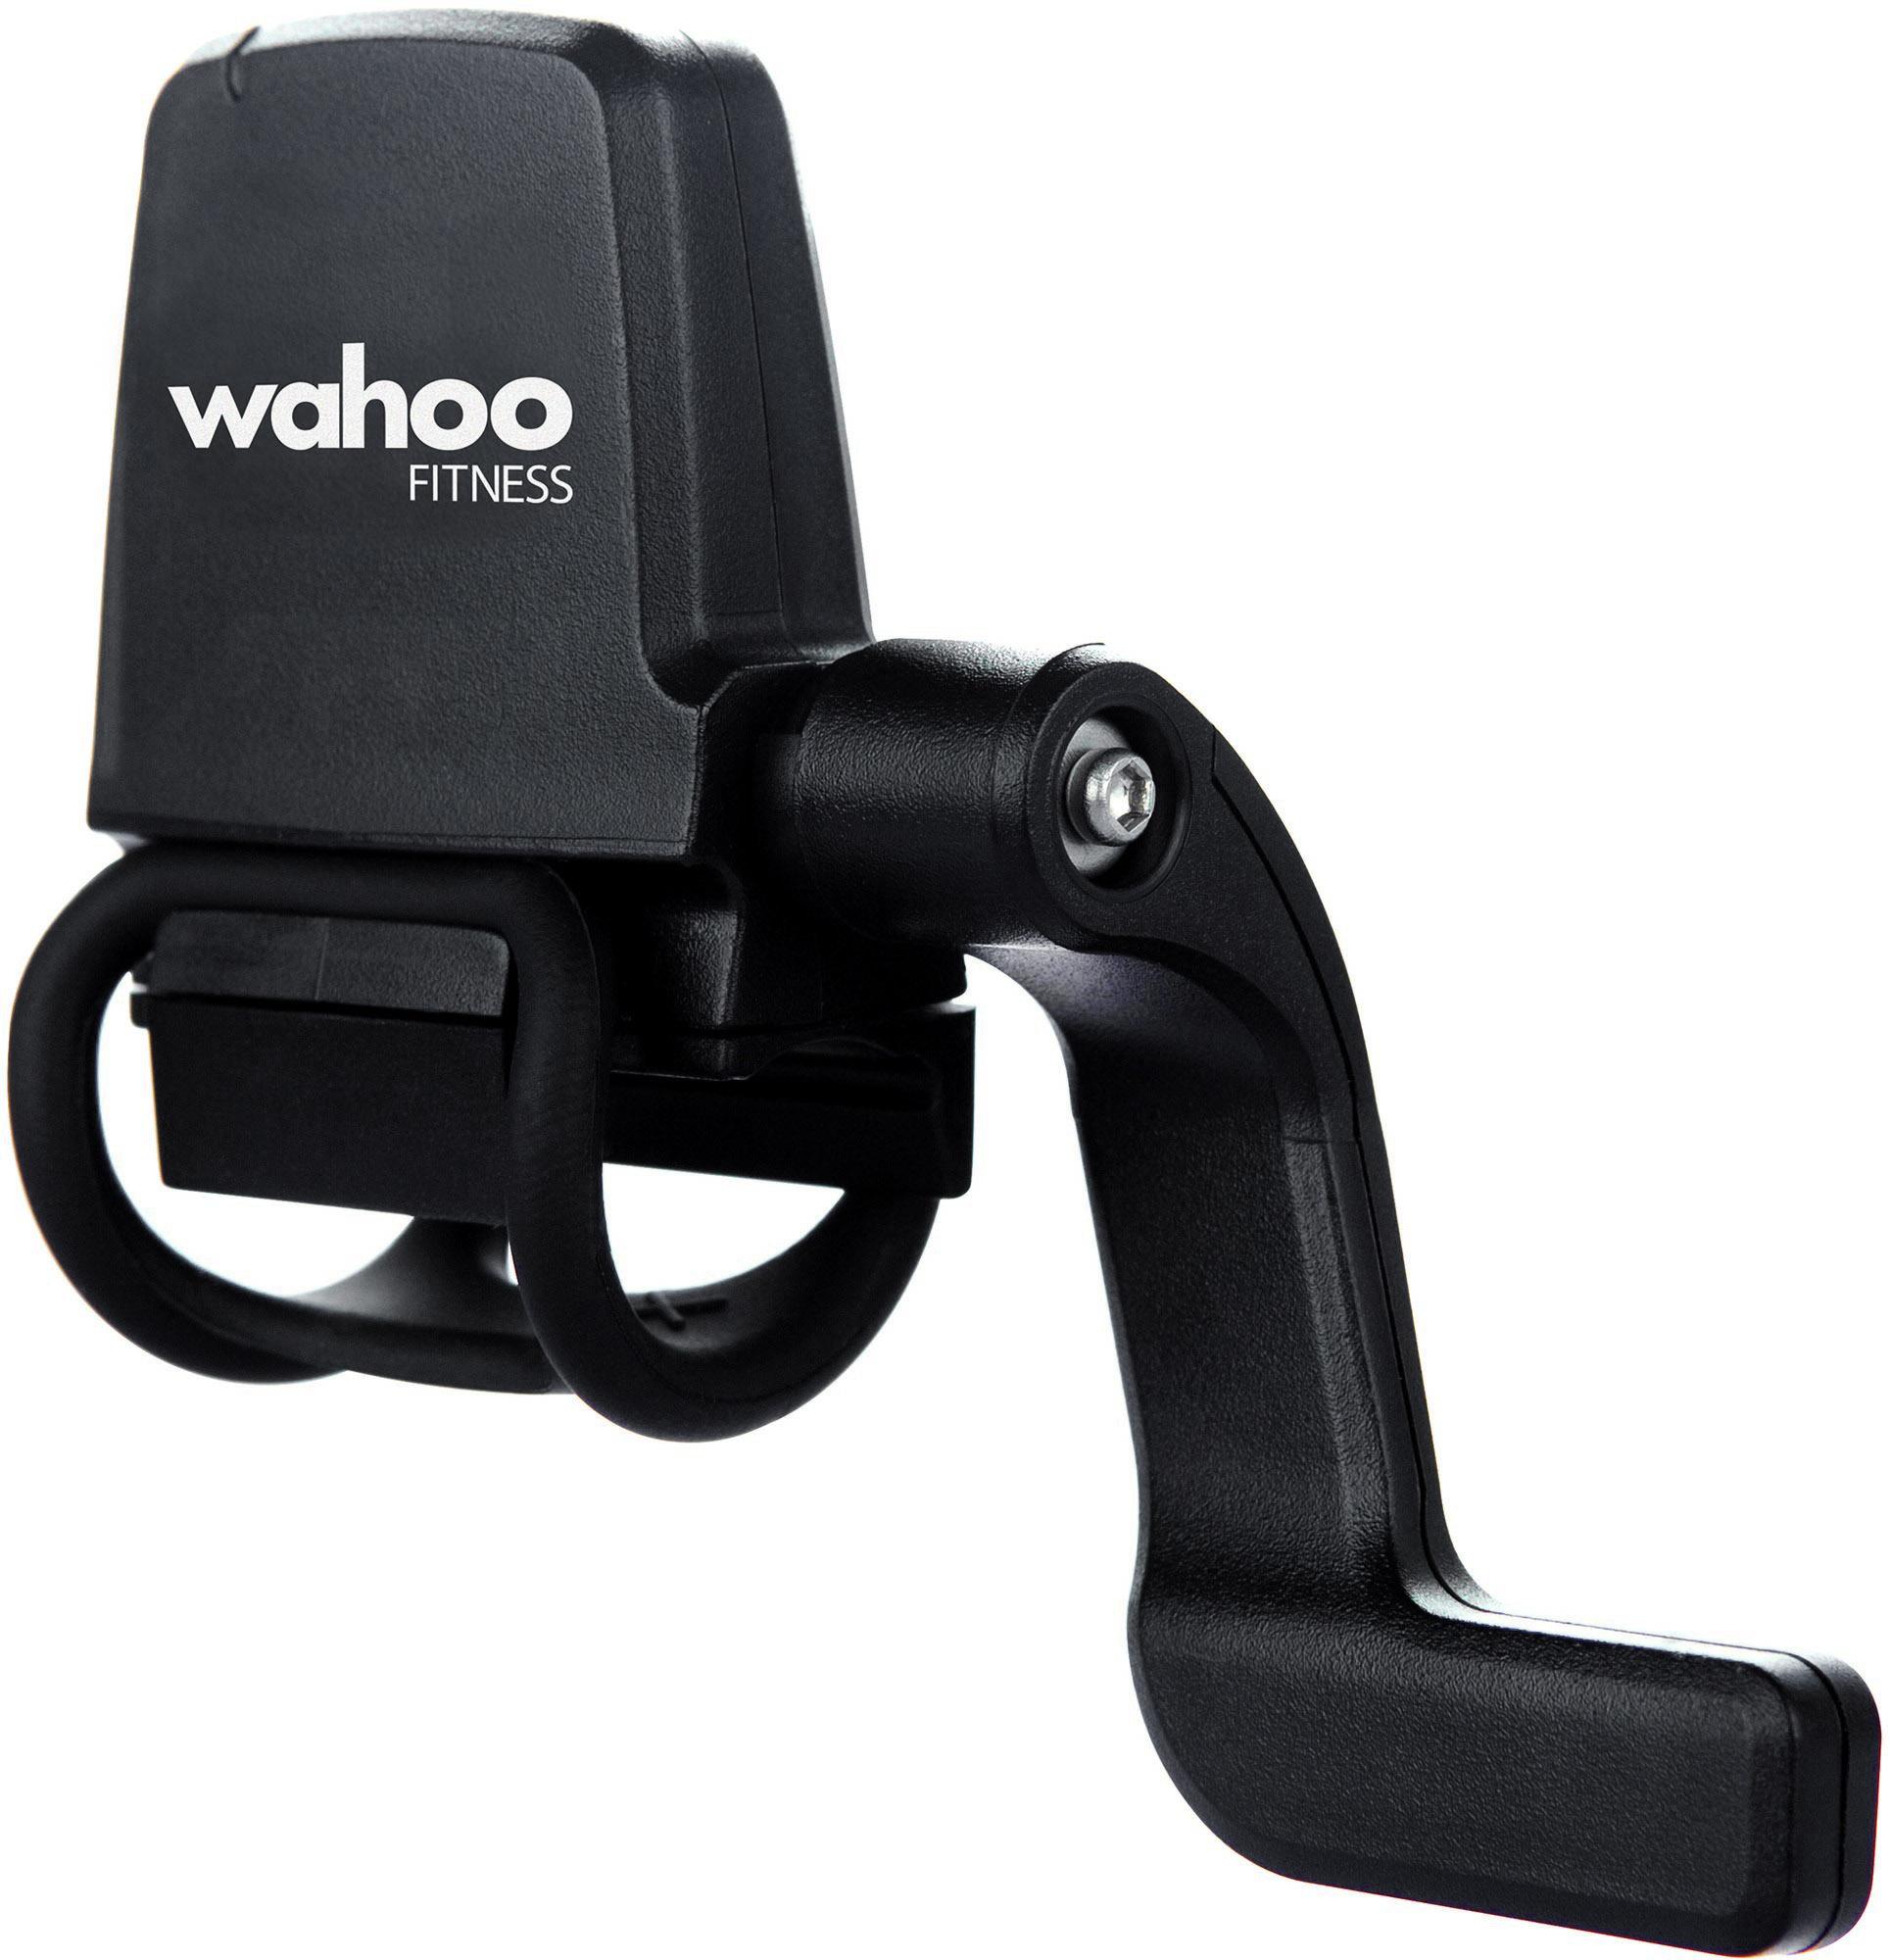 Wahoo Blue Sc SpeedandCadence Sensor - Black